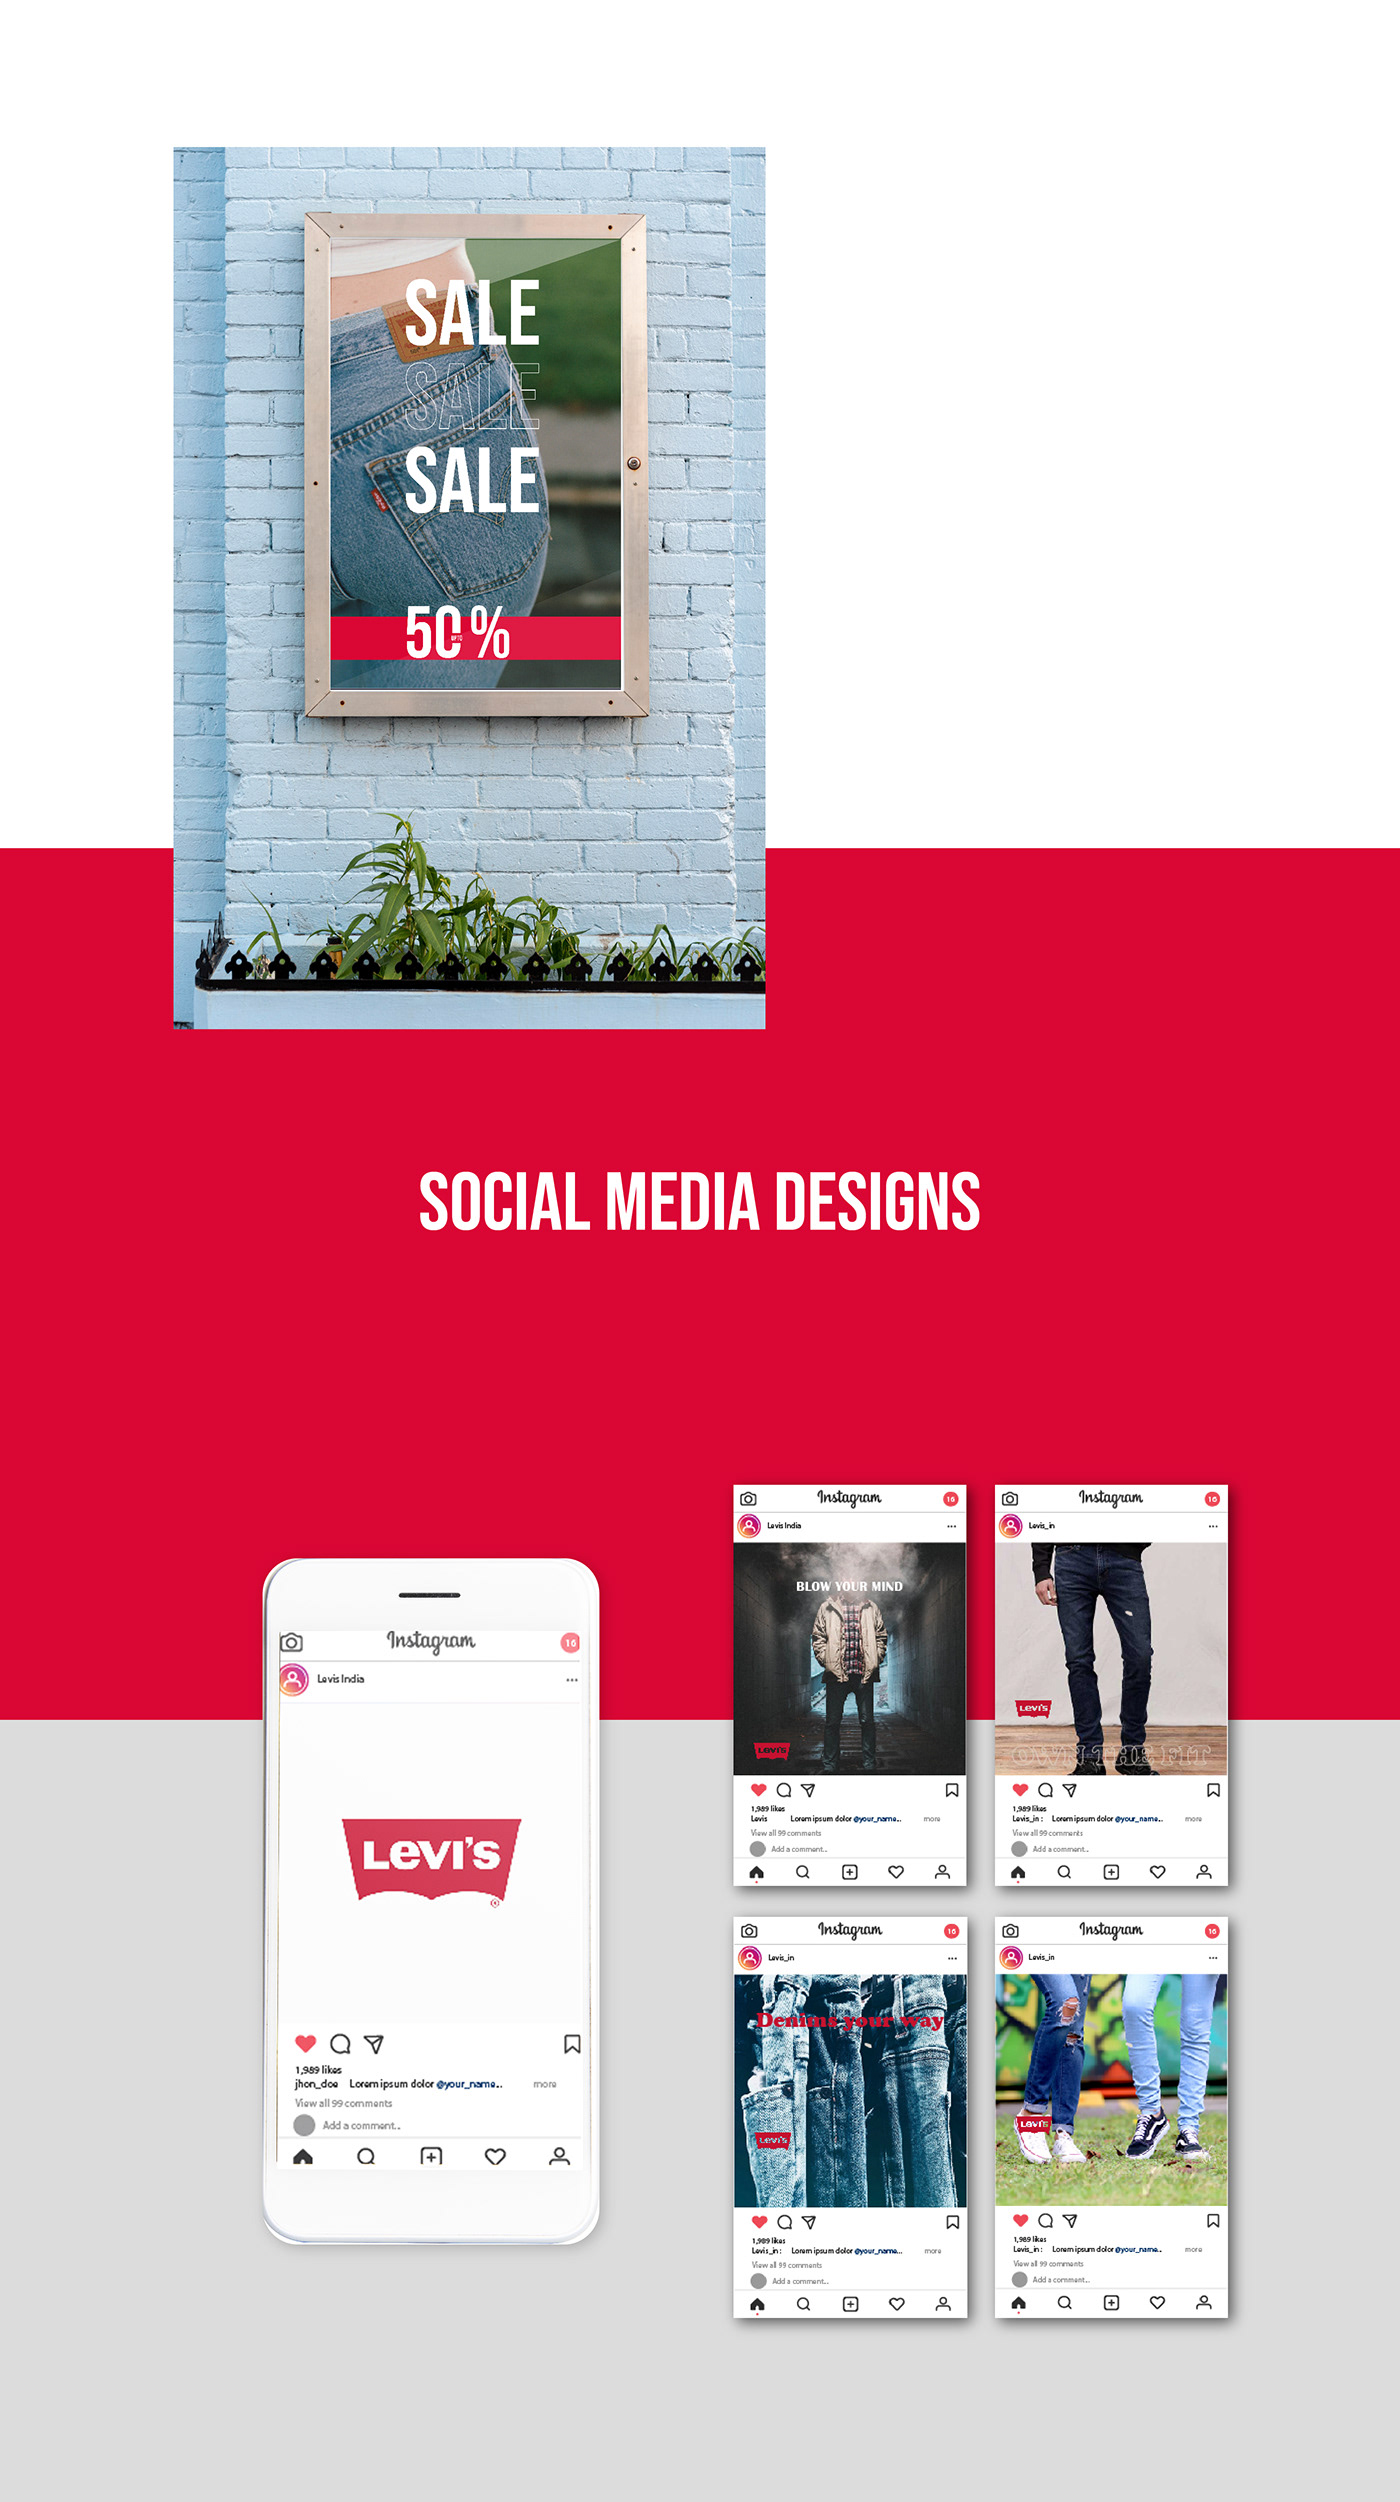 Levis website redesign concept